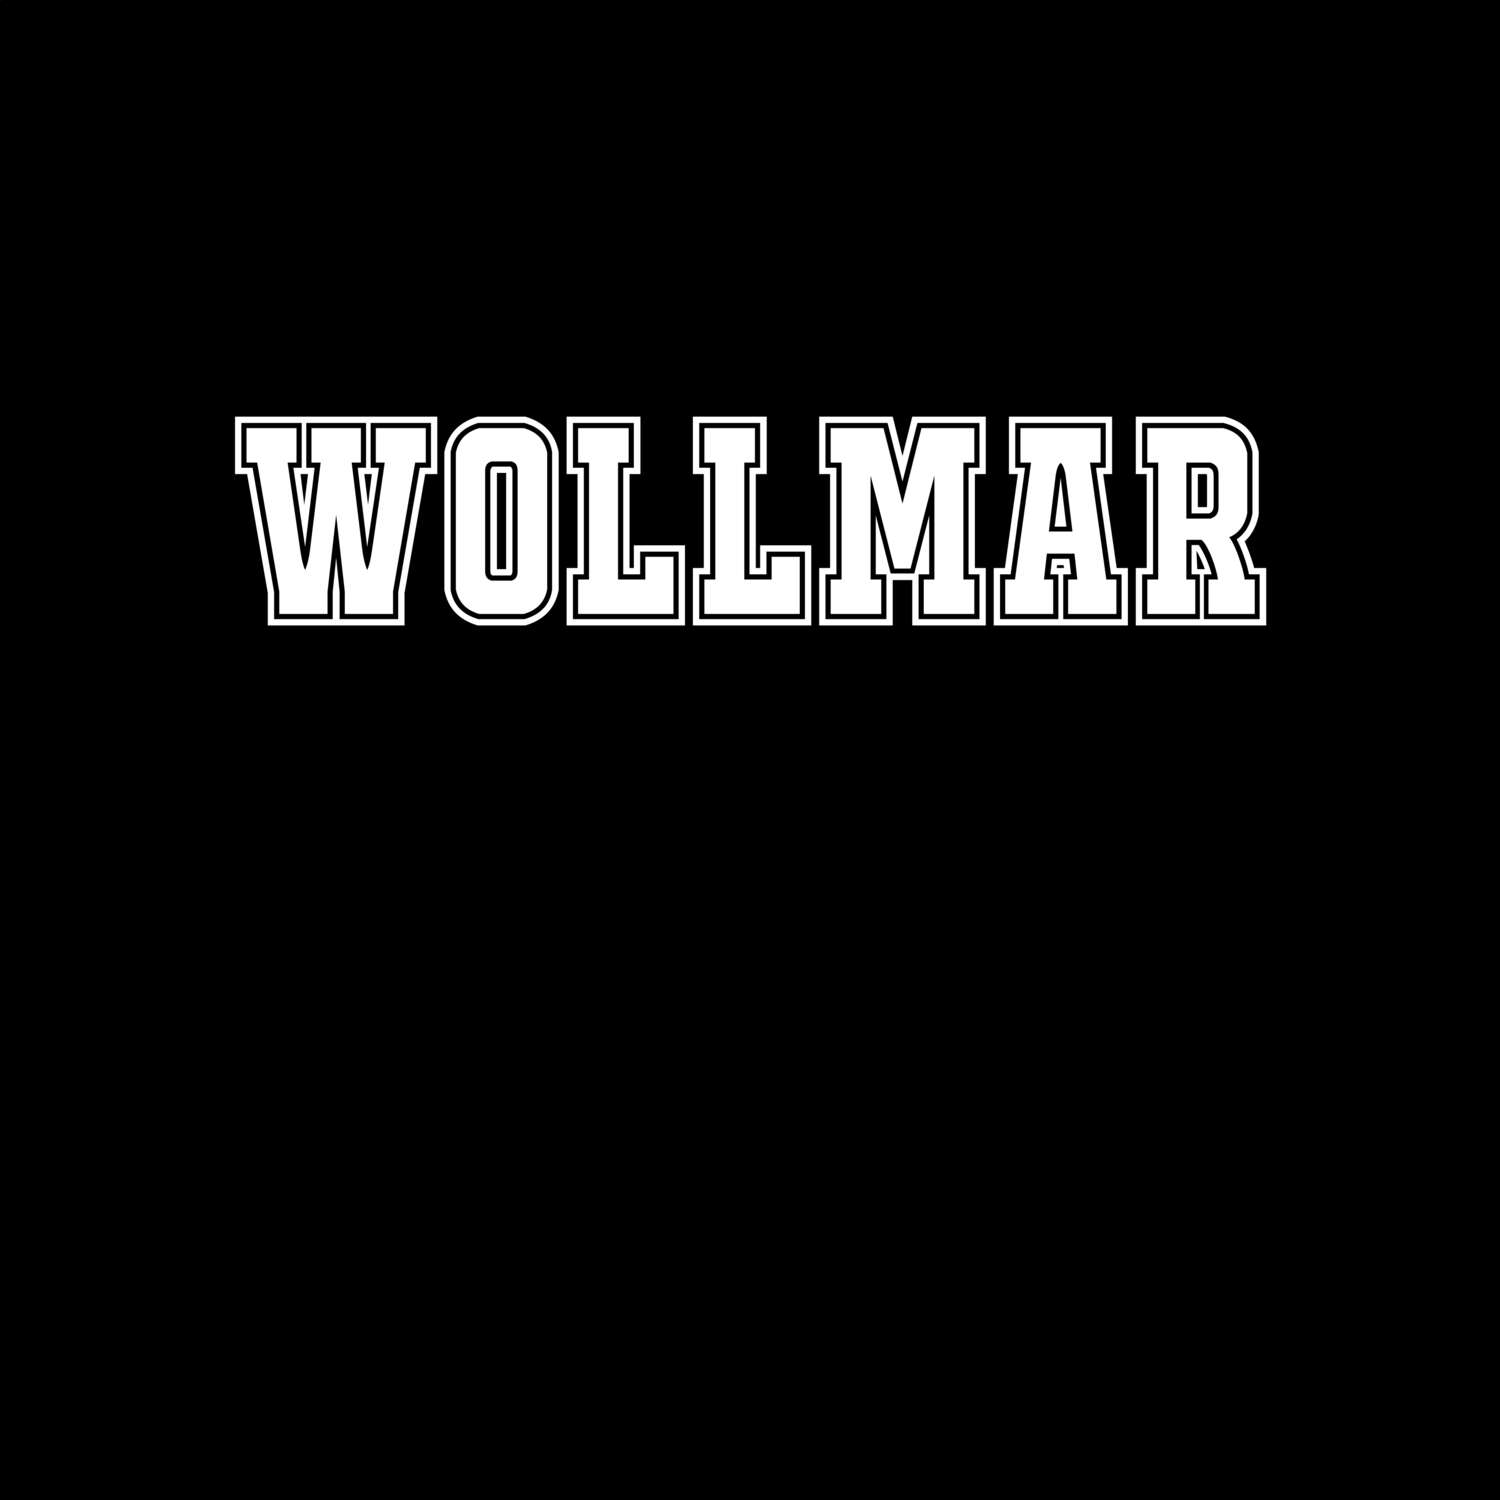 Wollmar T-Shirt »Classic«